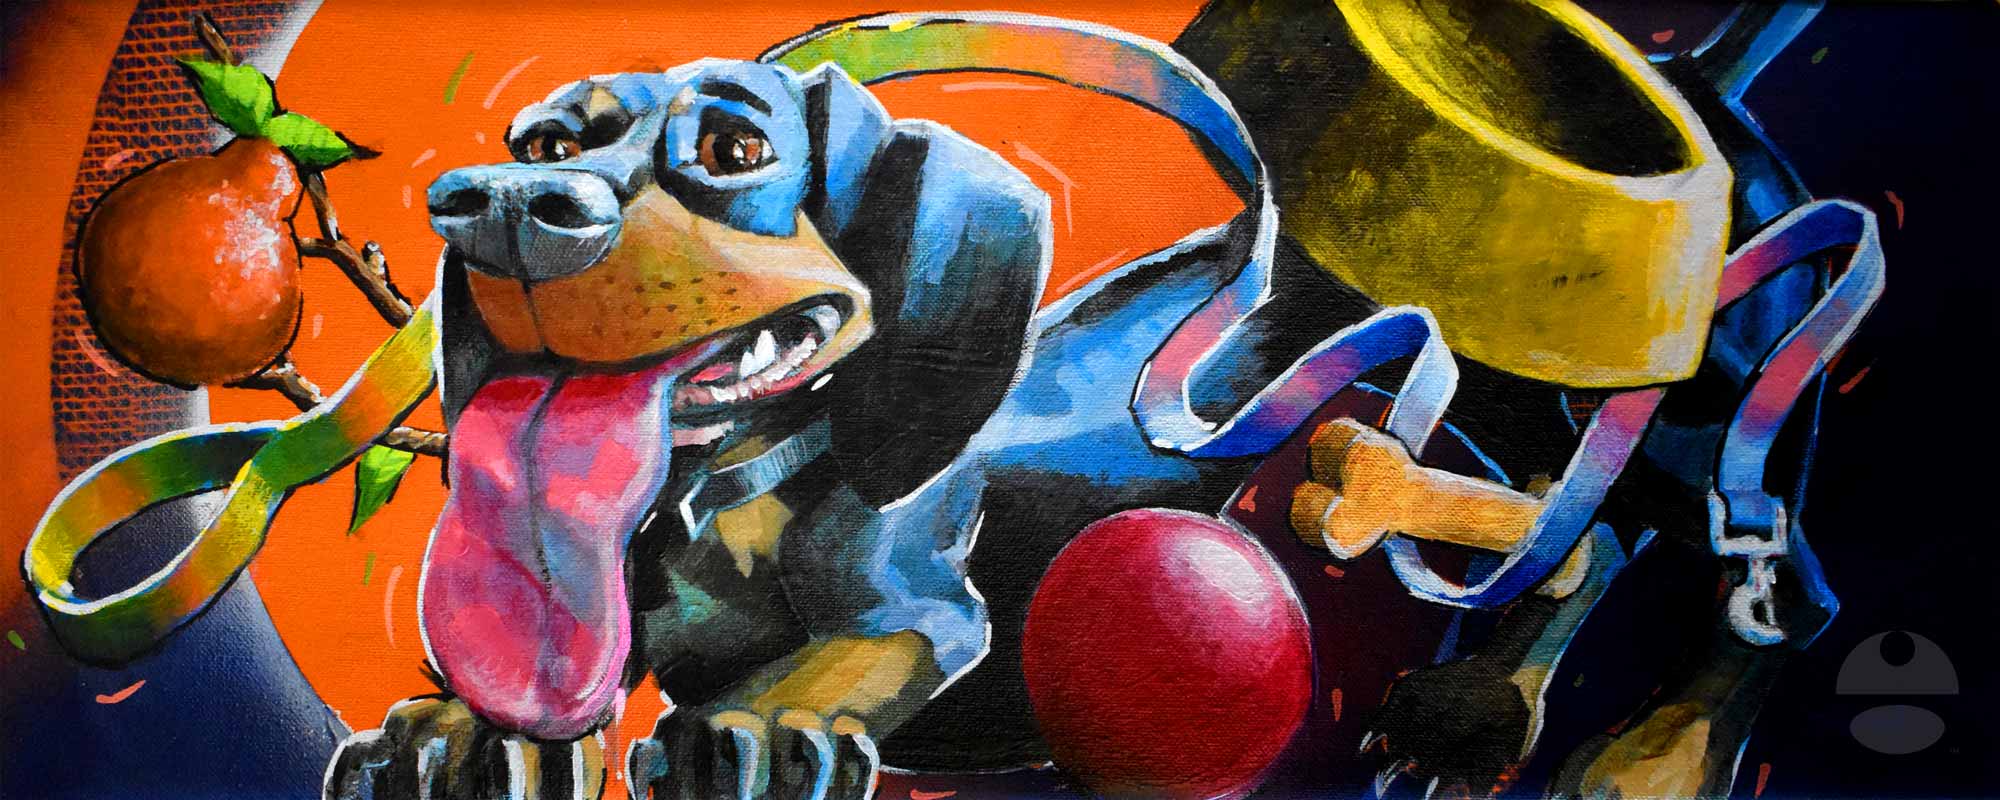 dog park mural study